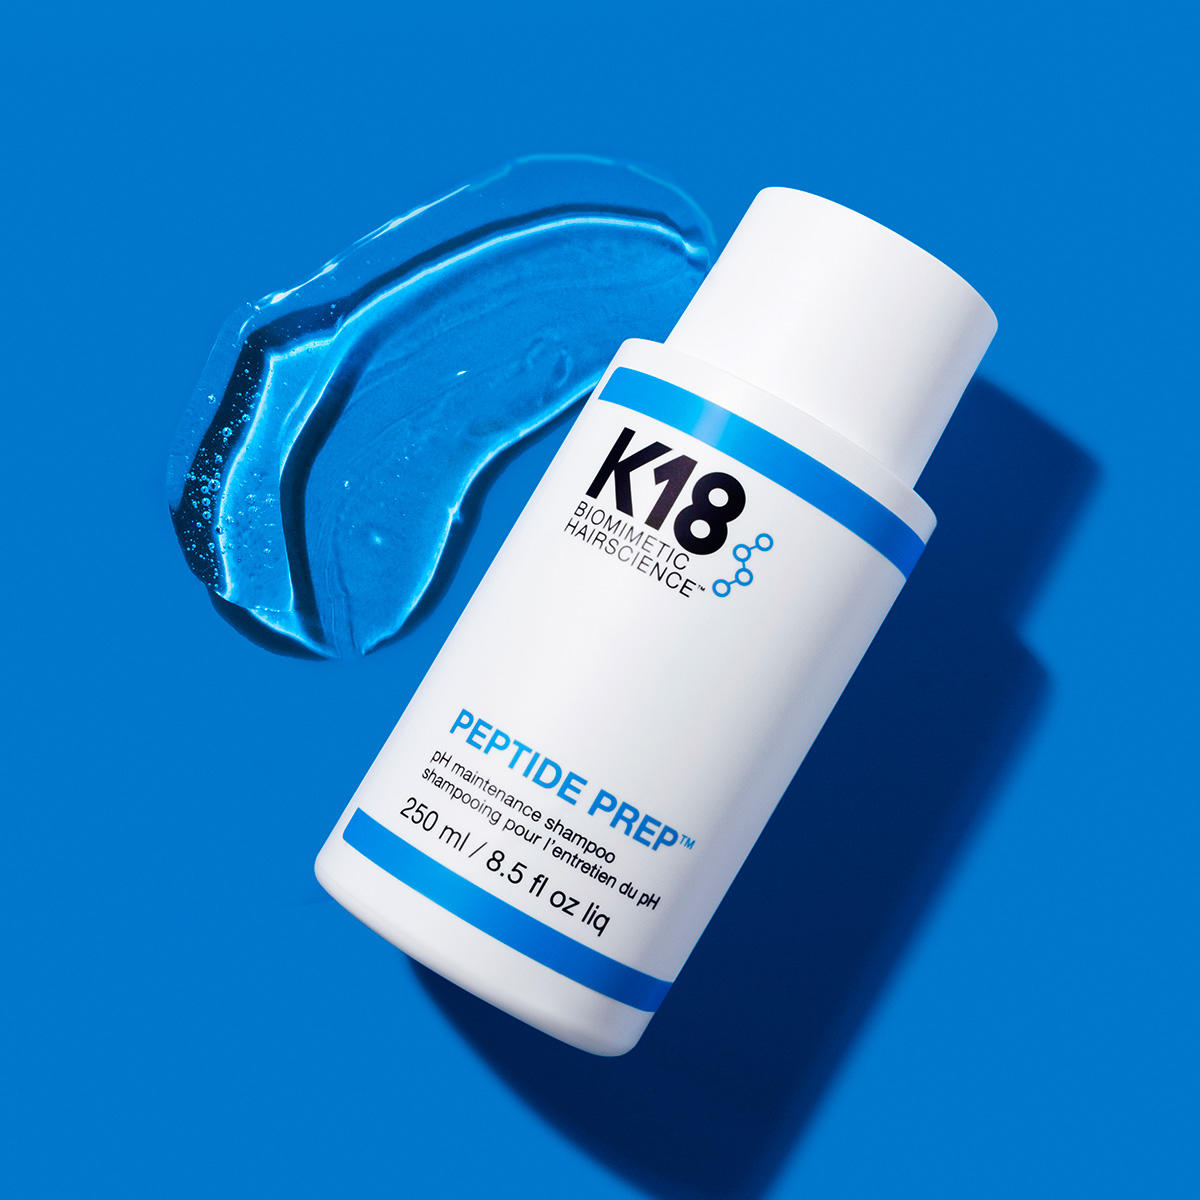 K18 Biomimetic Hairscience PEPTIDE PREP pH Maintenance Shampoo 250 ml - 3